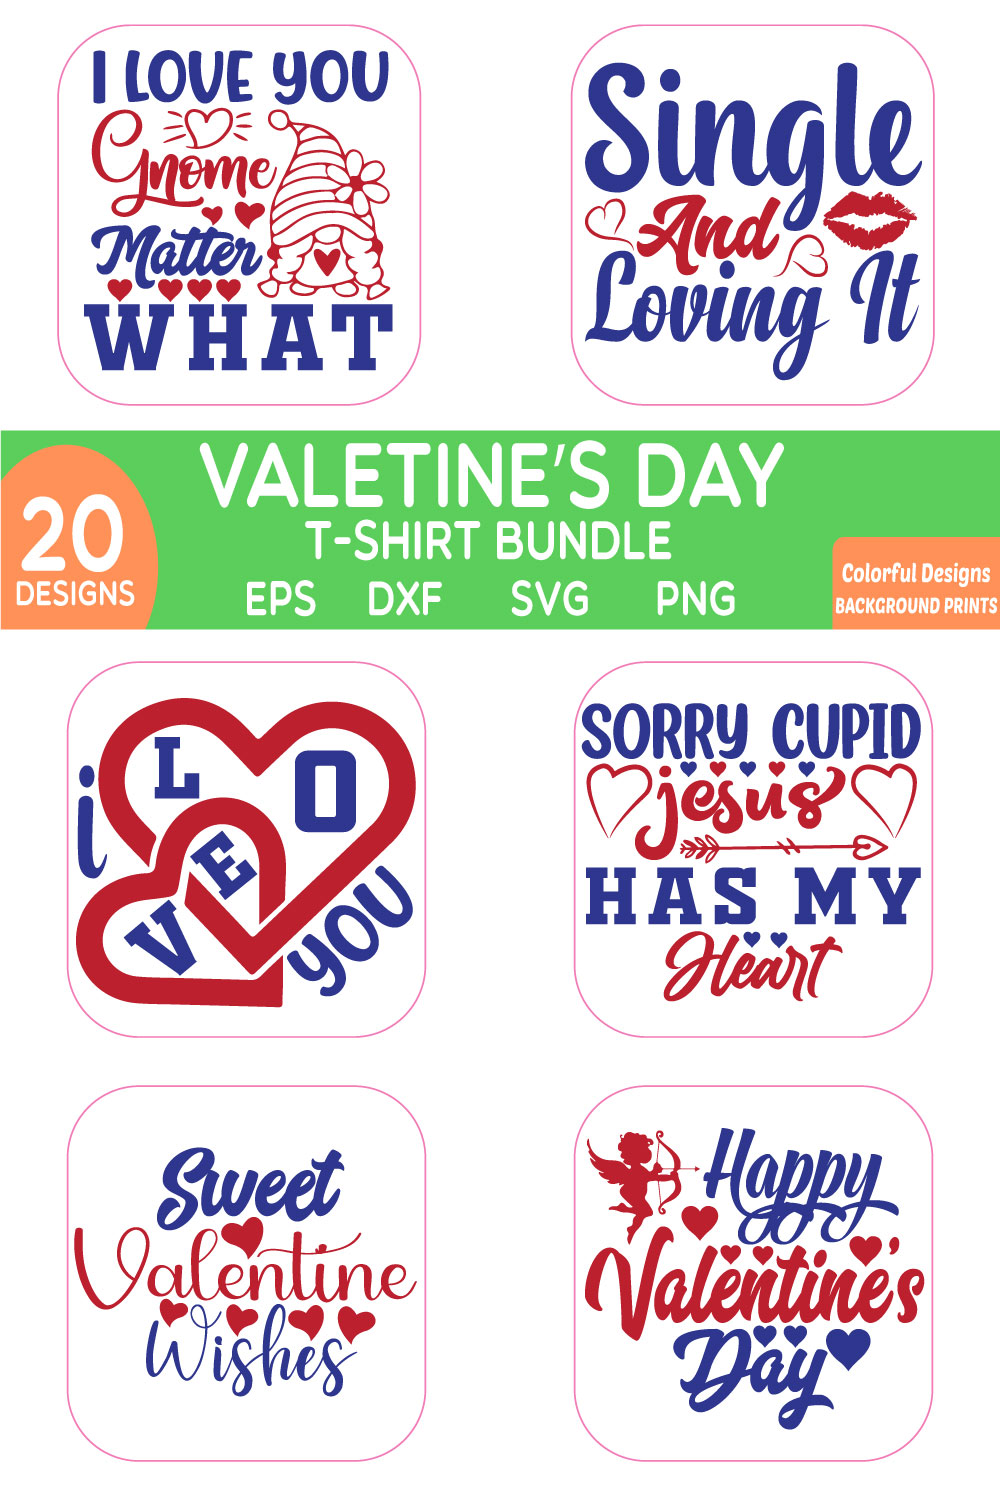 valentine's day t-shirt bundle pinterest preview image.